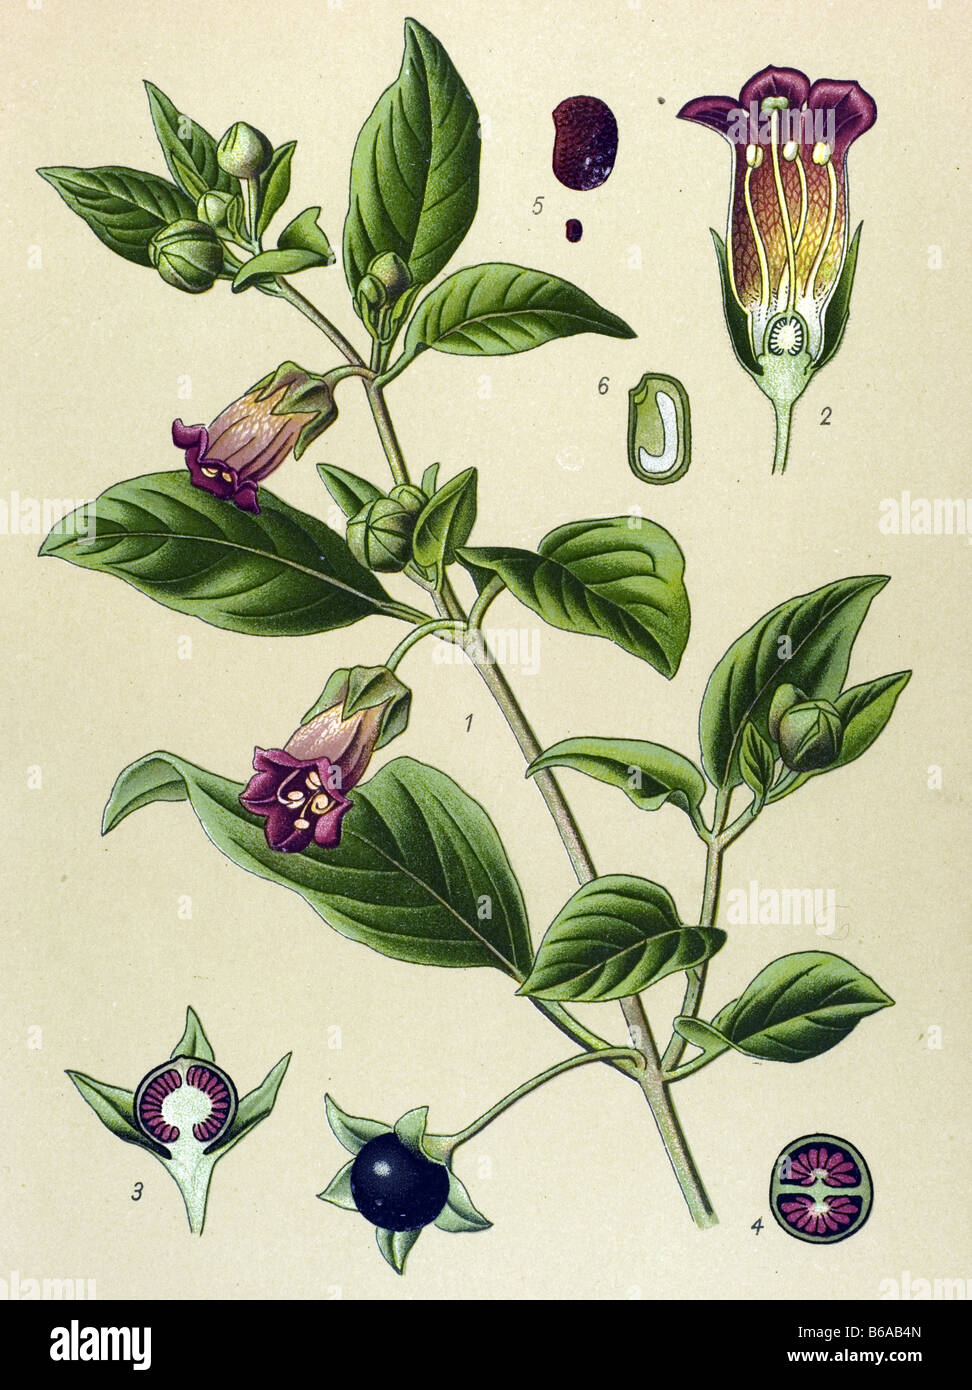 deadly nightshade, Atropa belladonna poisonous plants illustrations Stock Photo